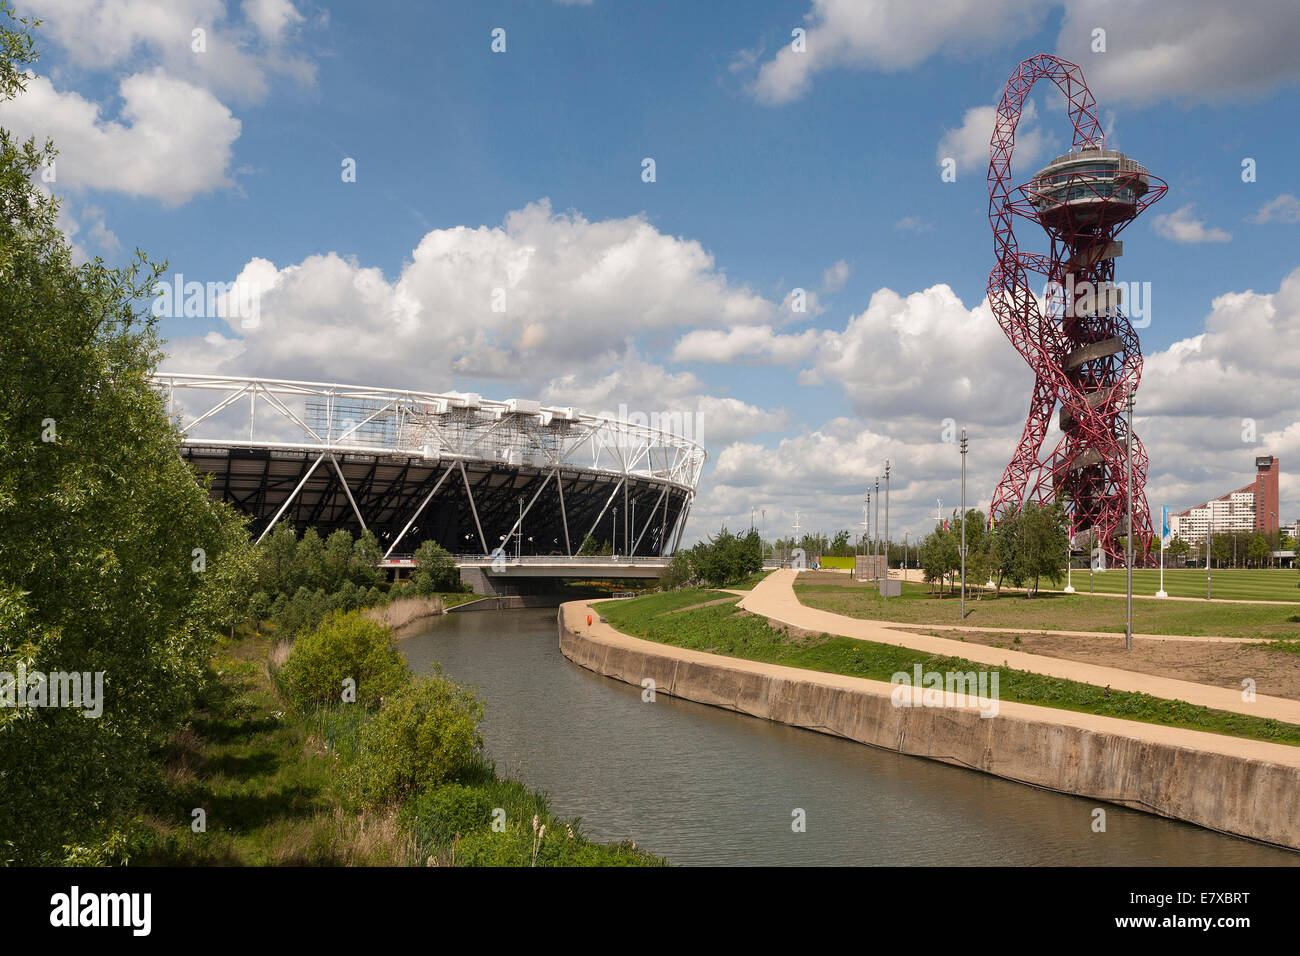 Angleterre Londres, Stratford, du parc olympique, Arcelormittal orbit & stadium Banque D'Images